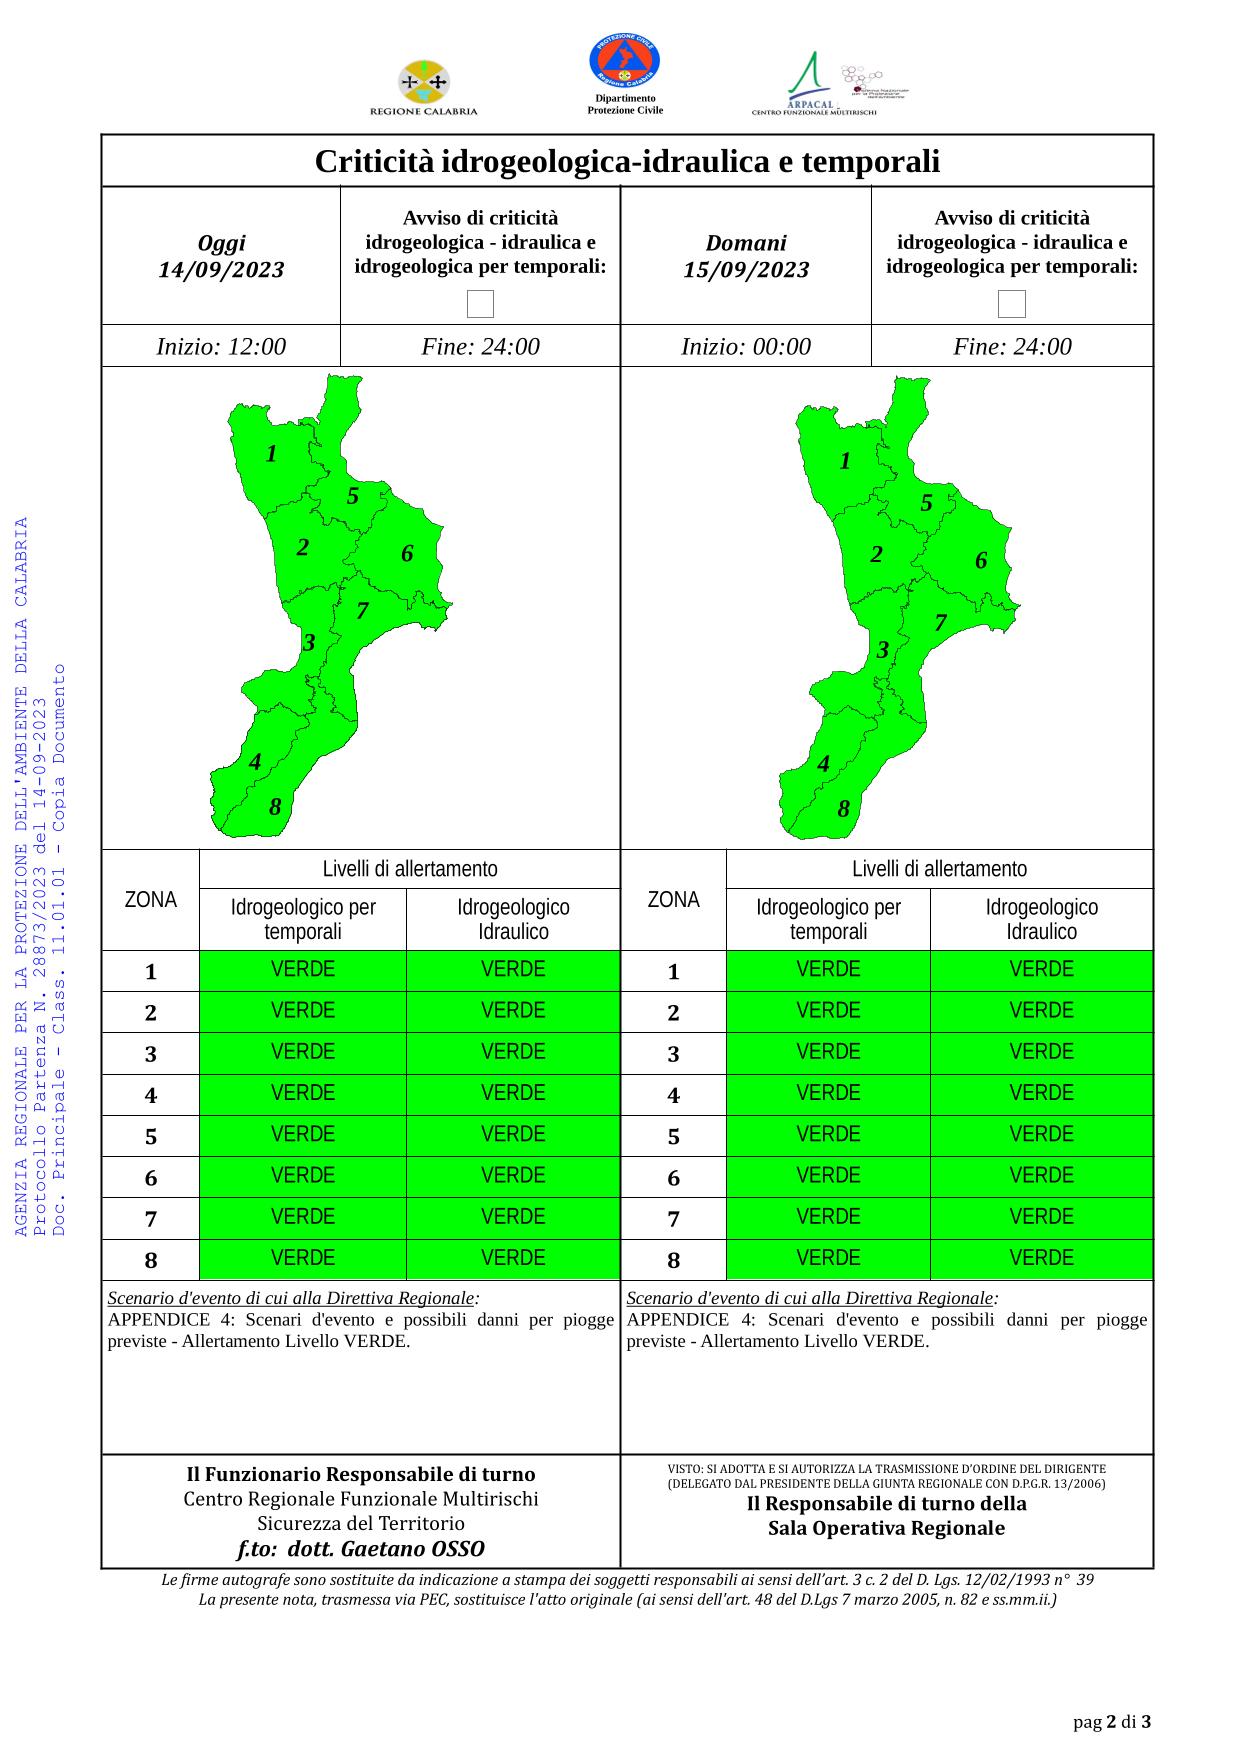 Criticità idrogeologica-idraulica e temporali in Calabria 14-09-2023